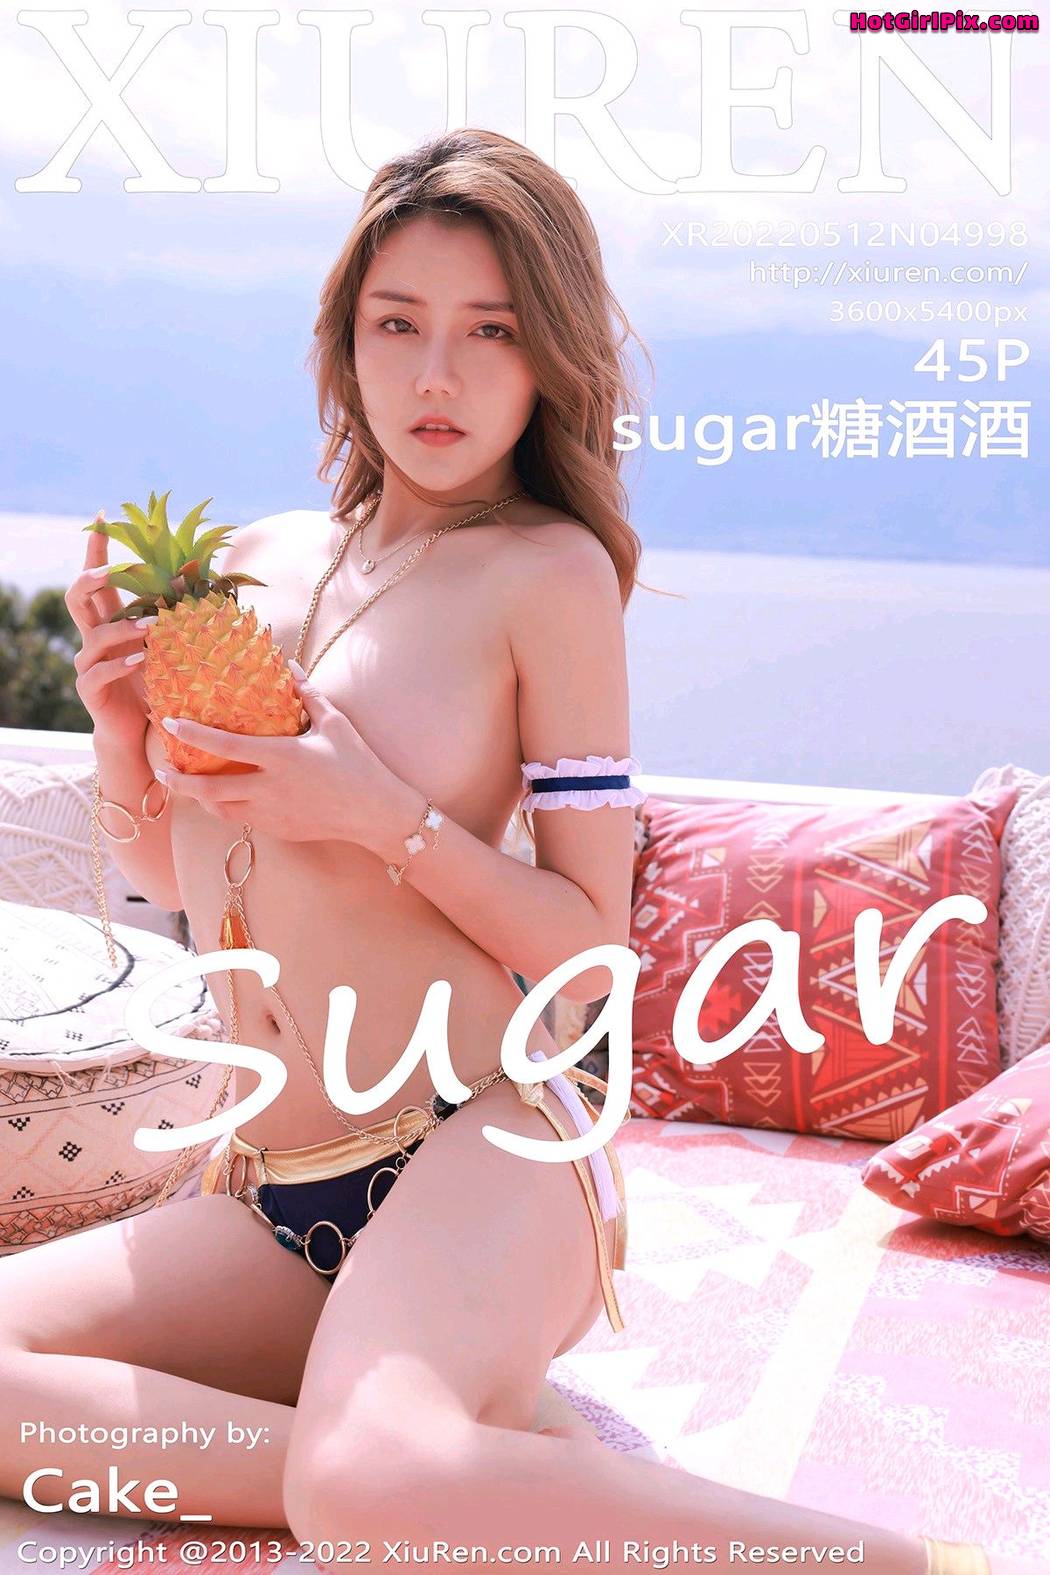 [XIUREN] No.4998 Sugar糖酒酒 Cover Photo